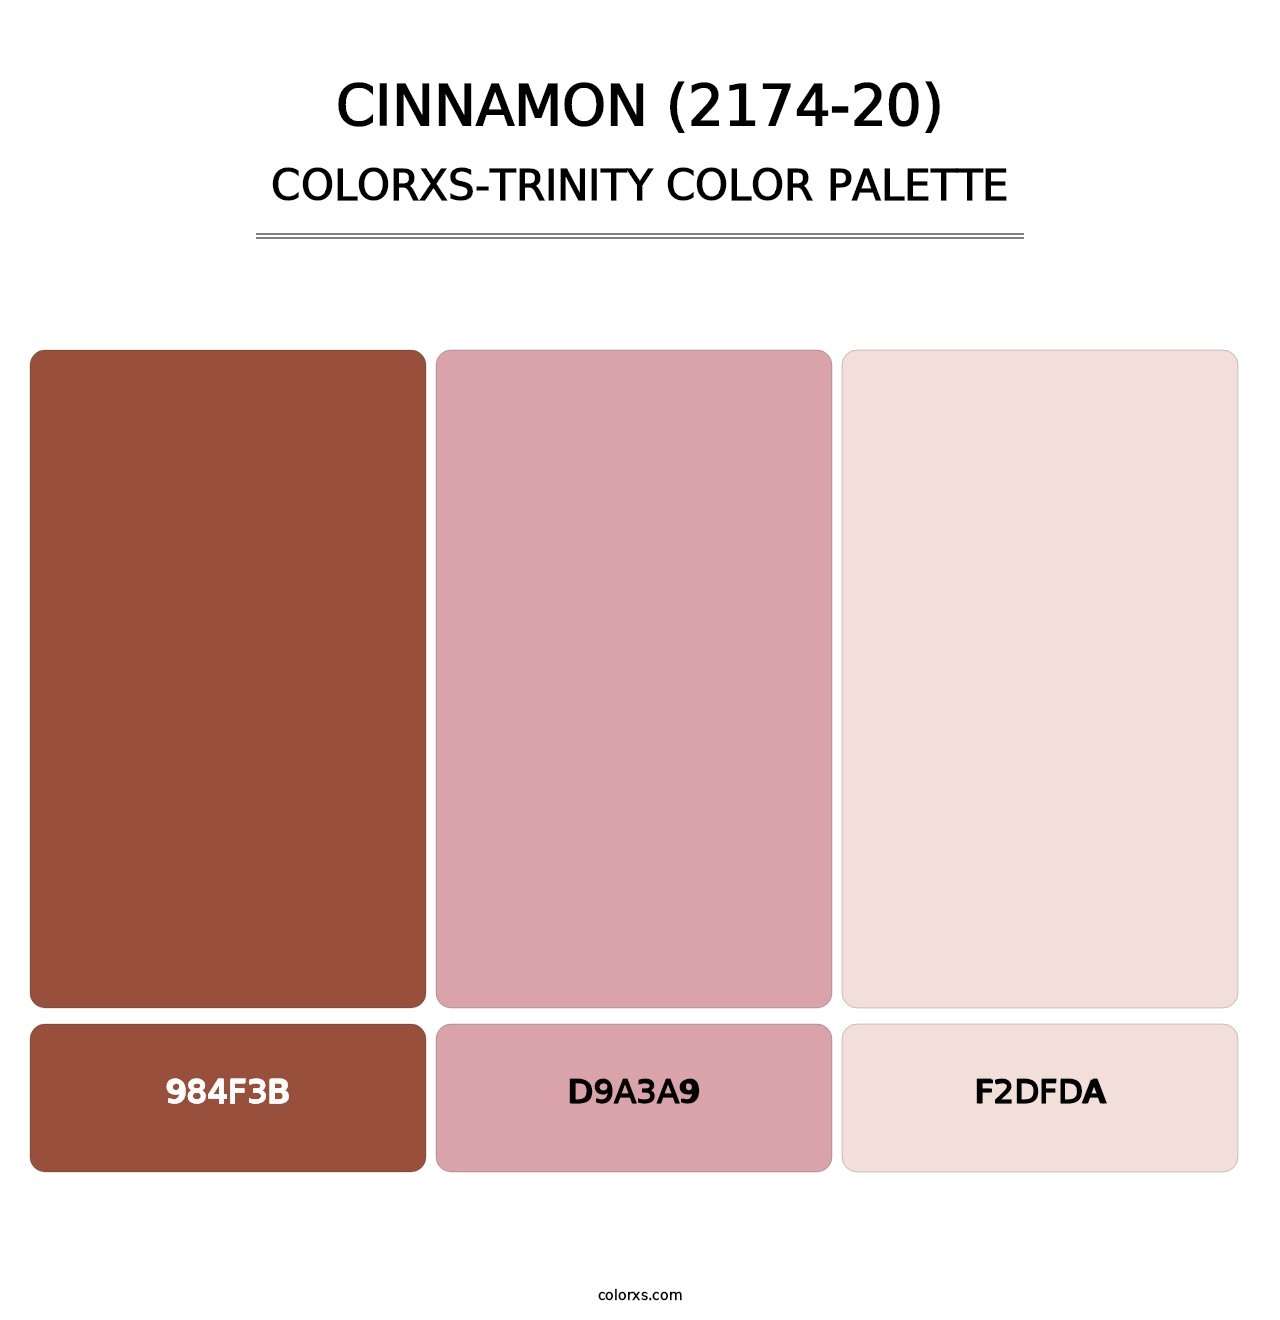 Cinnamon (2174-20) - Colorxs Trinity Palette